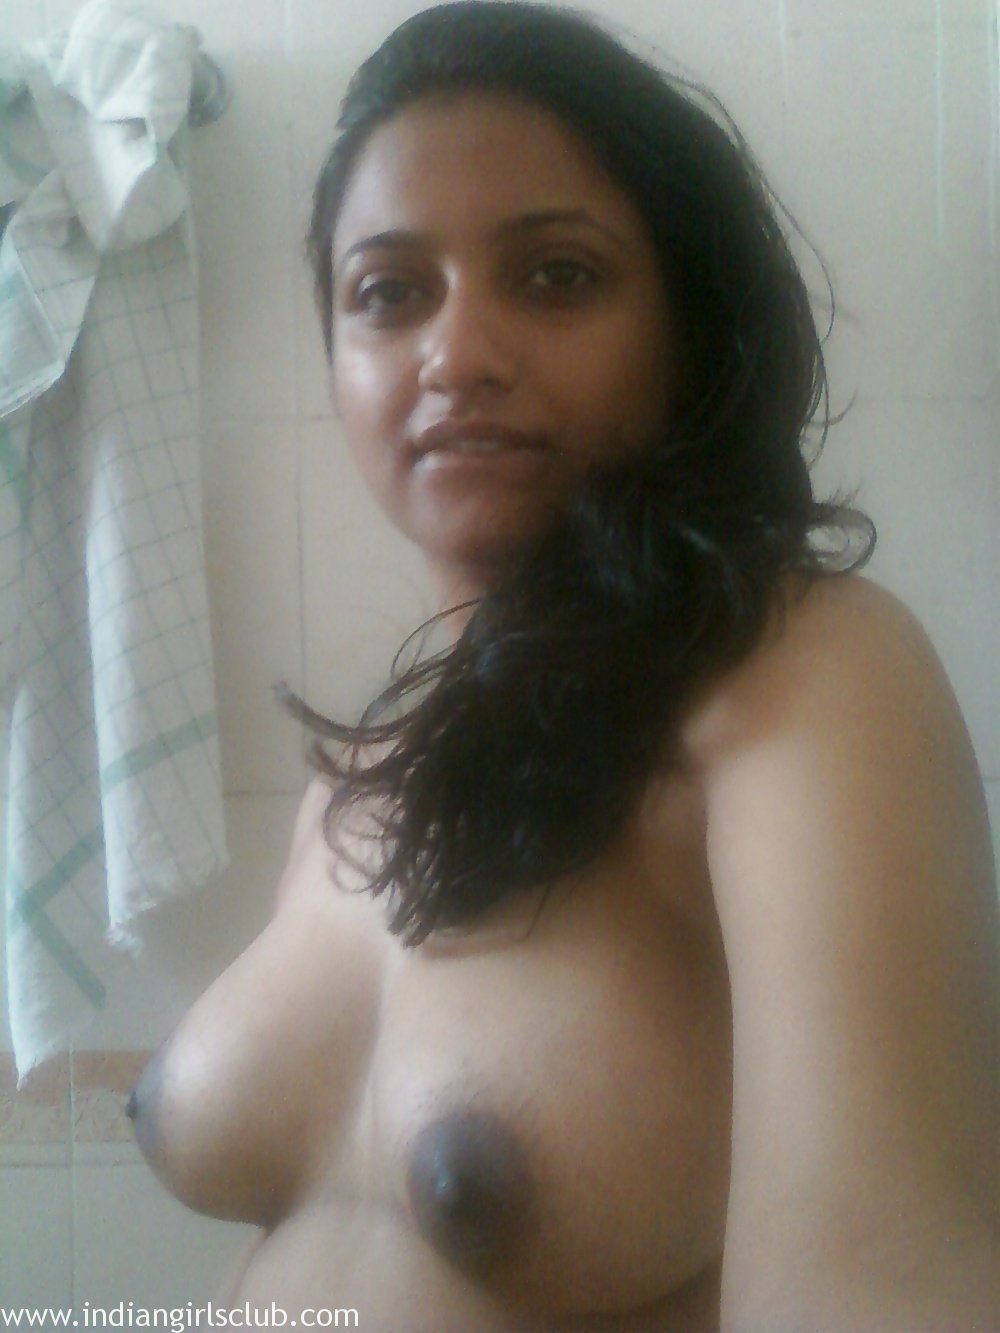 Usha Xxx Sex - Usha Indian Girl Nude Sex Photos - Indian Girls Club